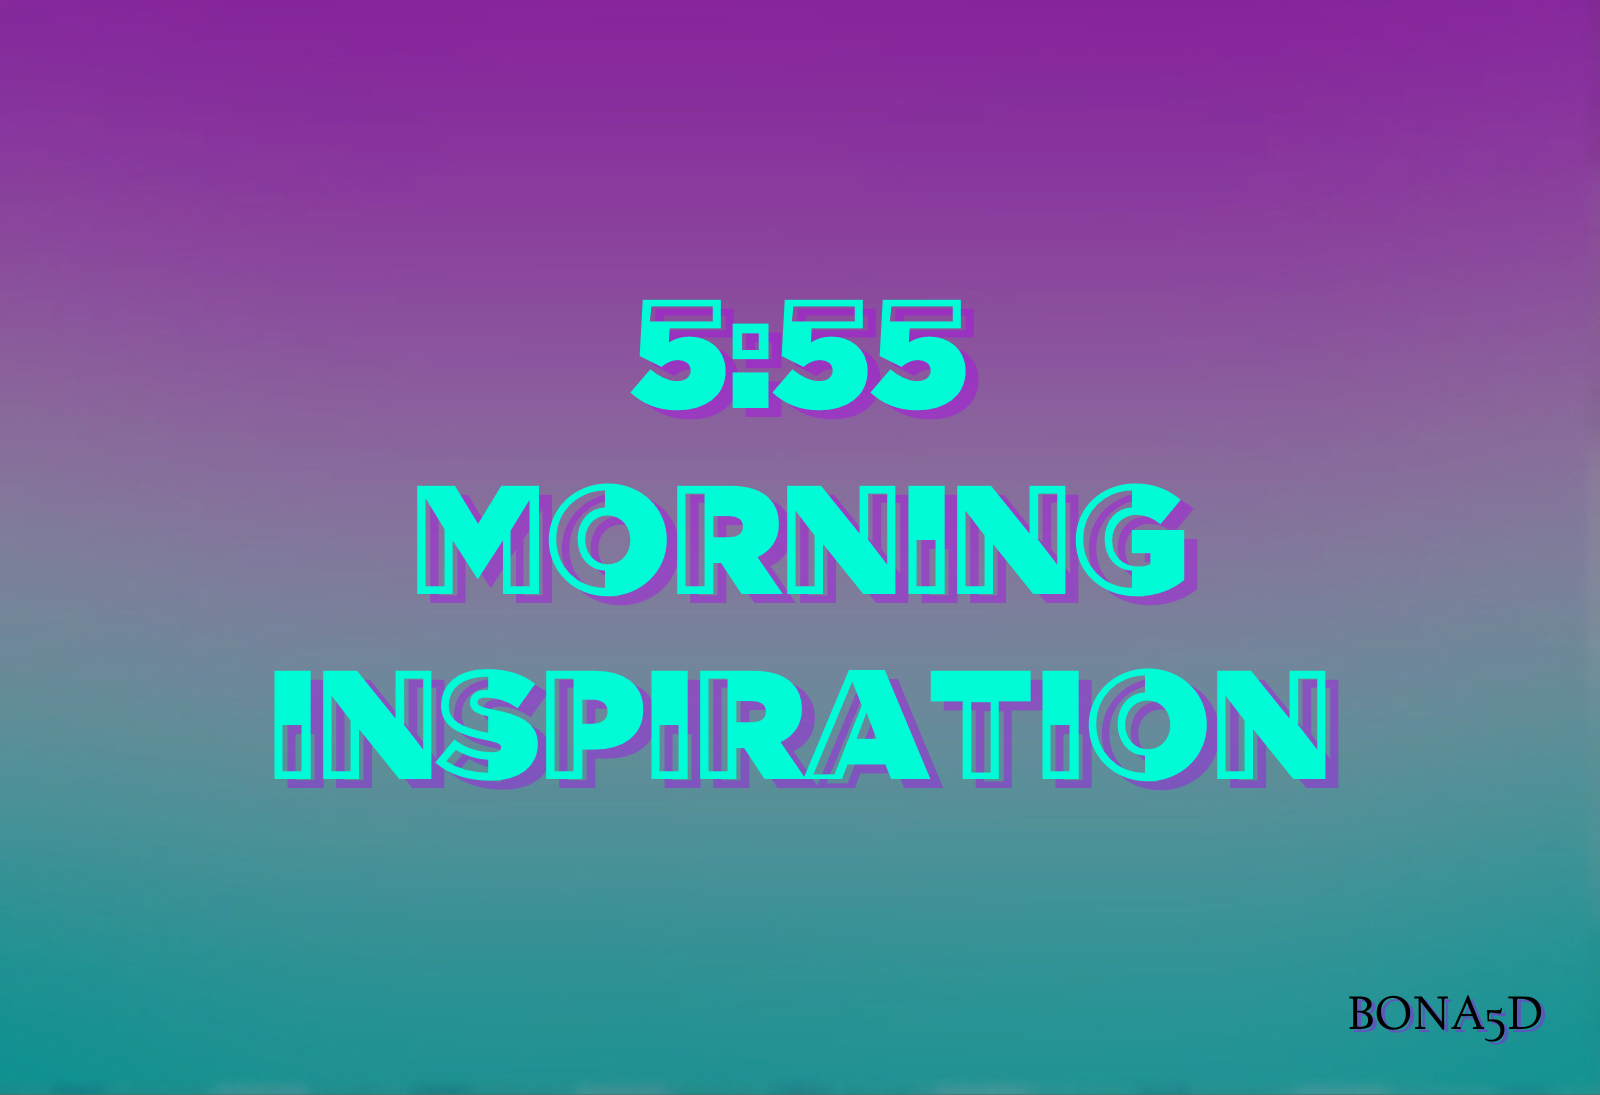 03-06-20 morning inspiration